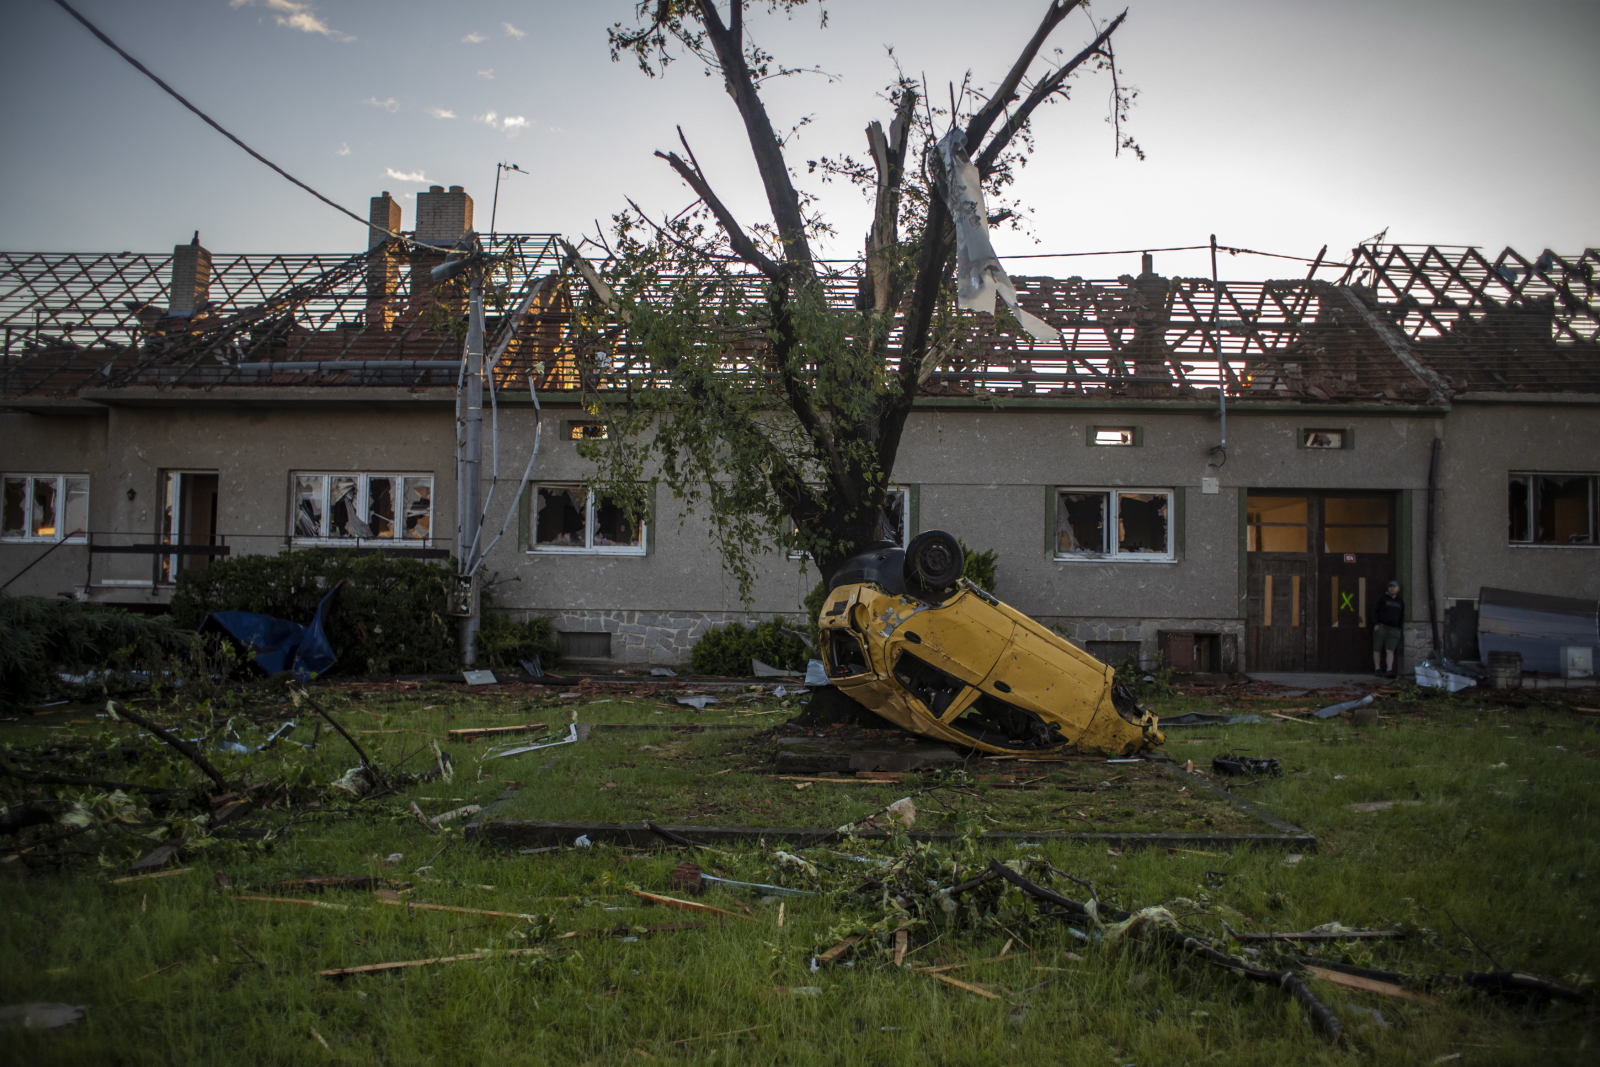 Czechy, zniszczenia po tornado  EPA/MARTIN DIVISEK 
Dostawca: PAP/EPA.